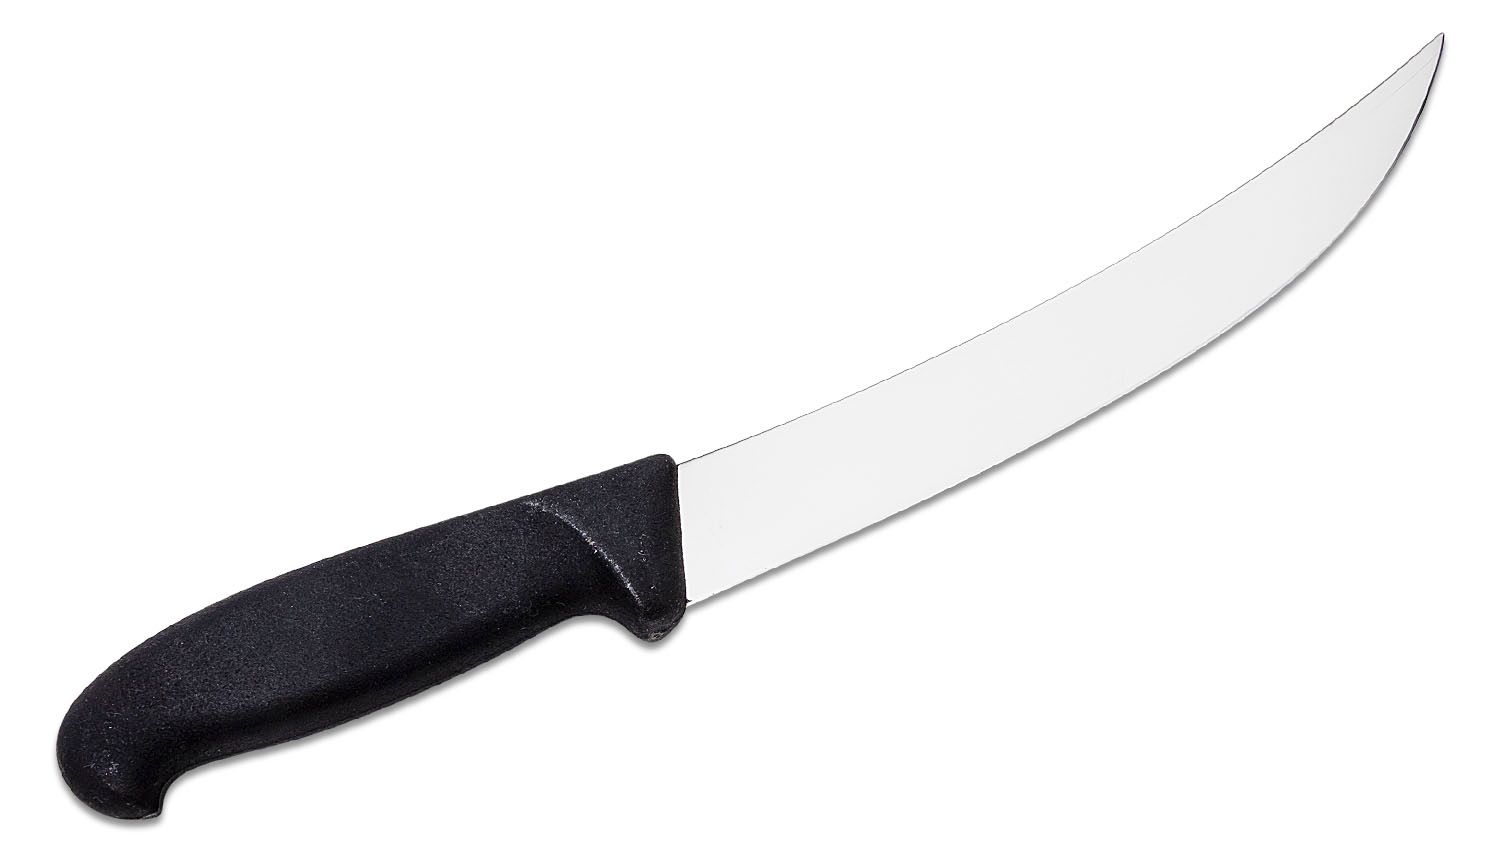 Victorinox 10 inch Breaking Knife - Black Fibrox Handle